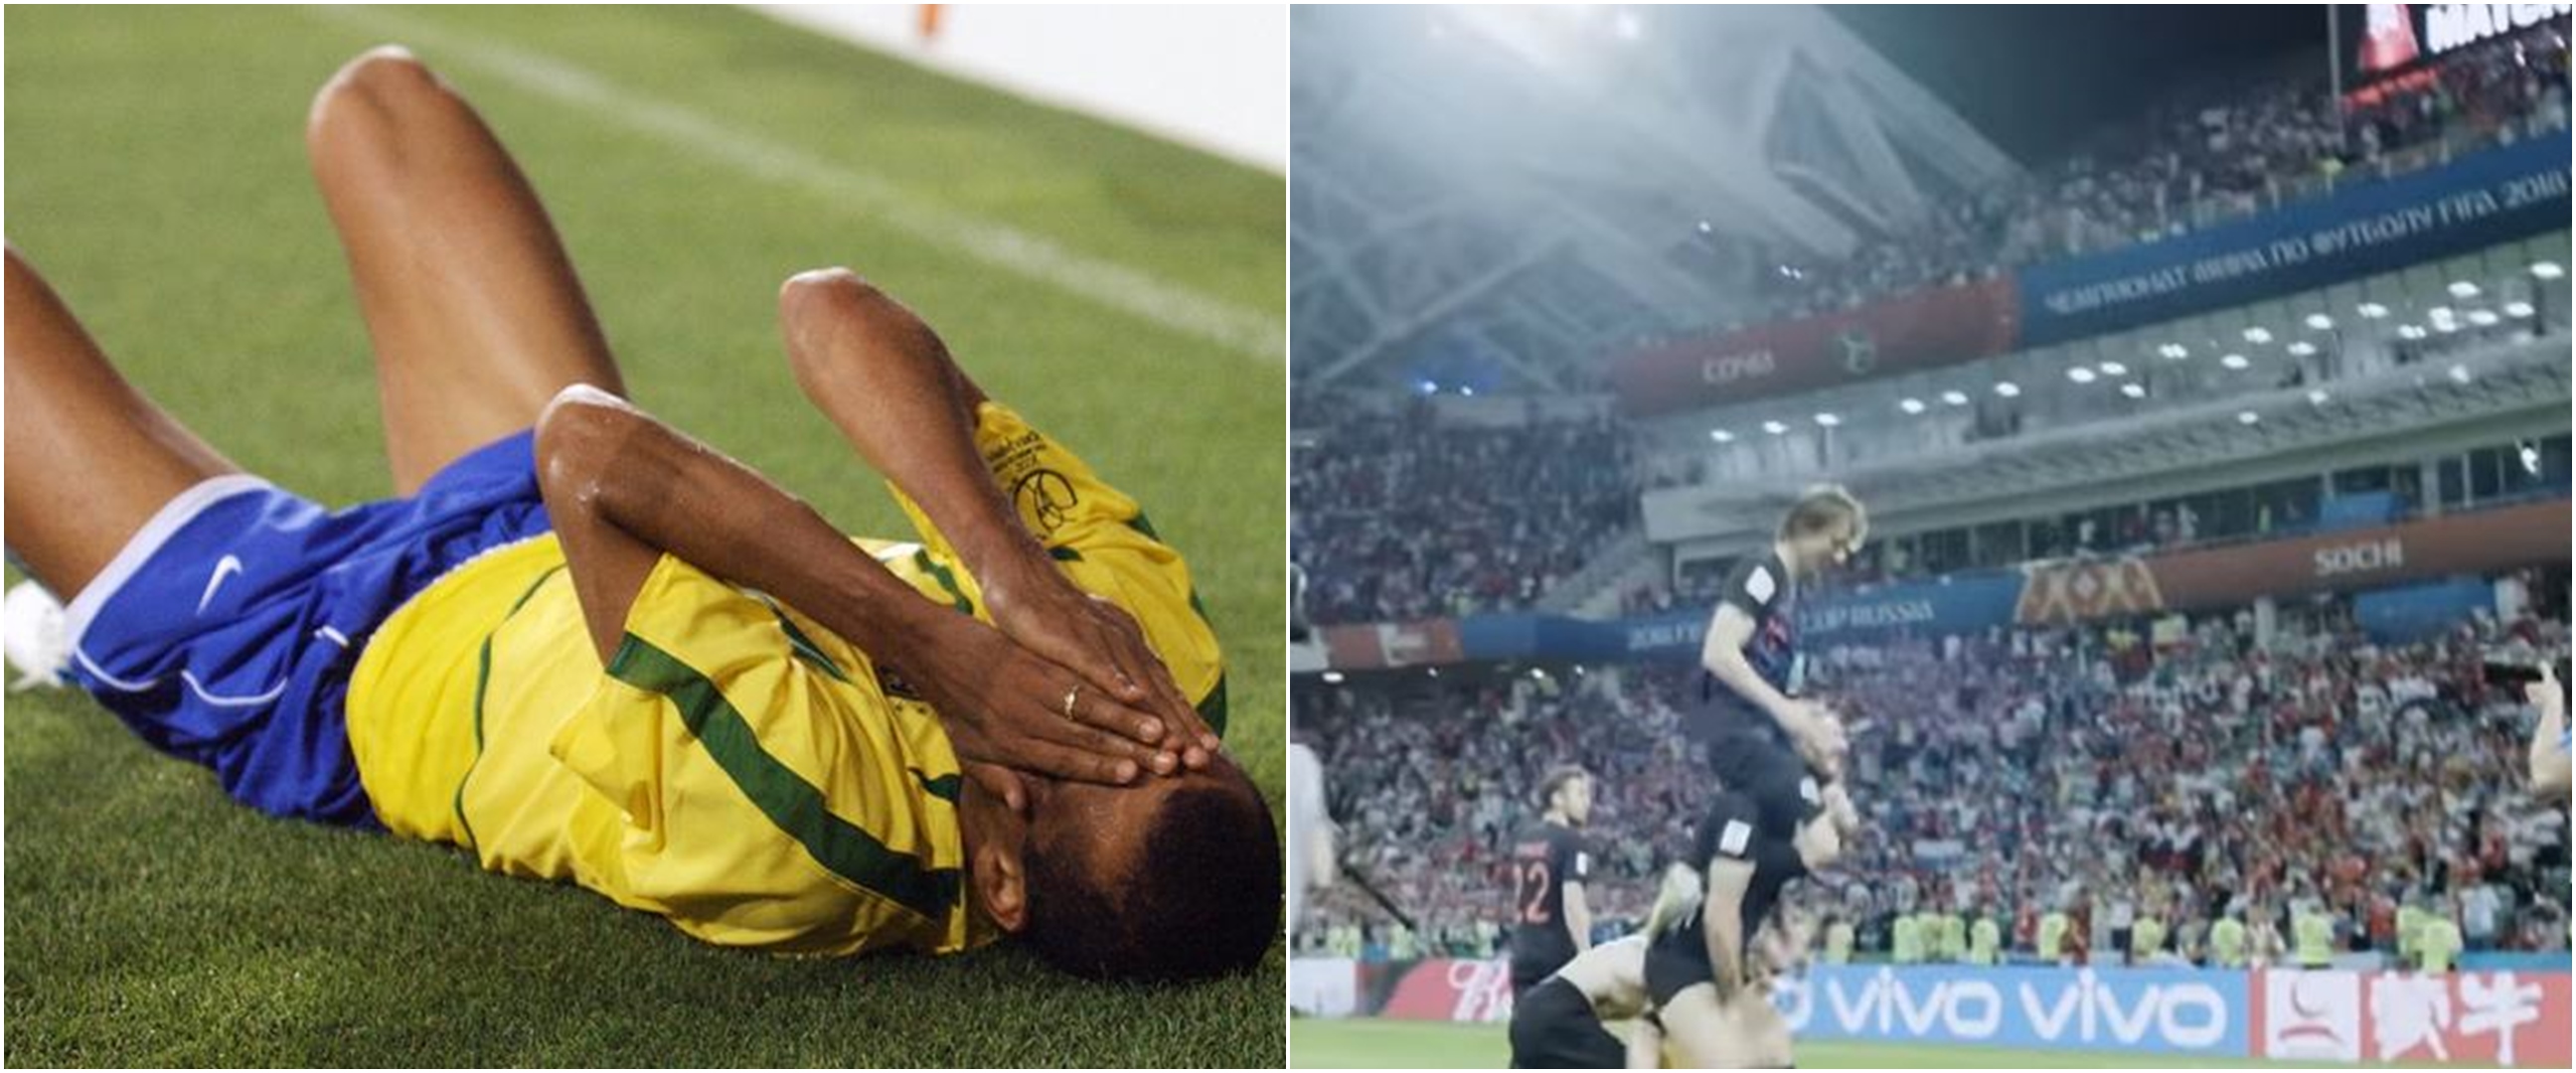 Momen lucu di Piala Dunia, dari akting cedera sampai celana melorot